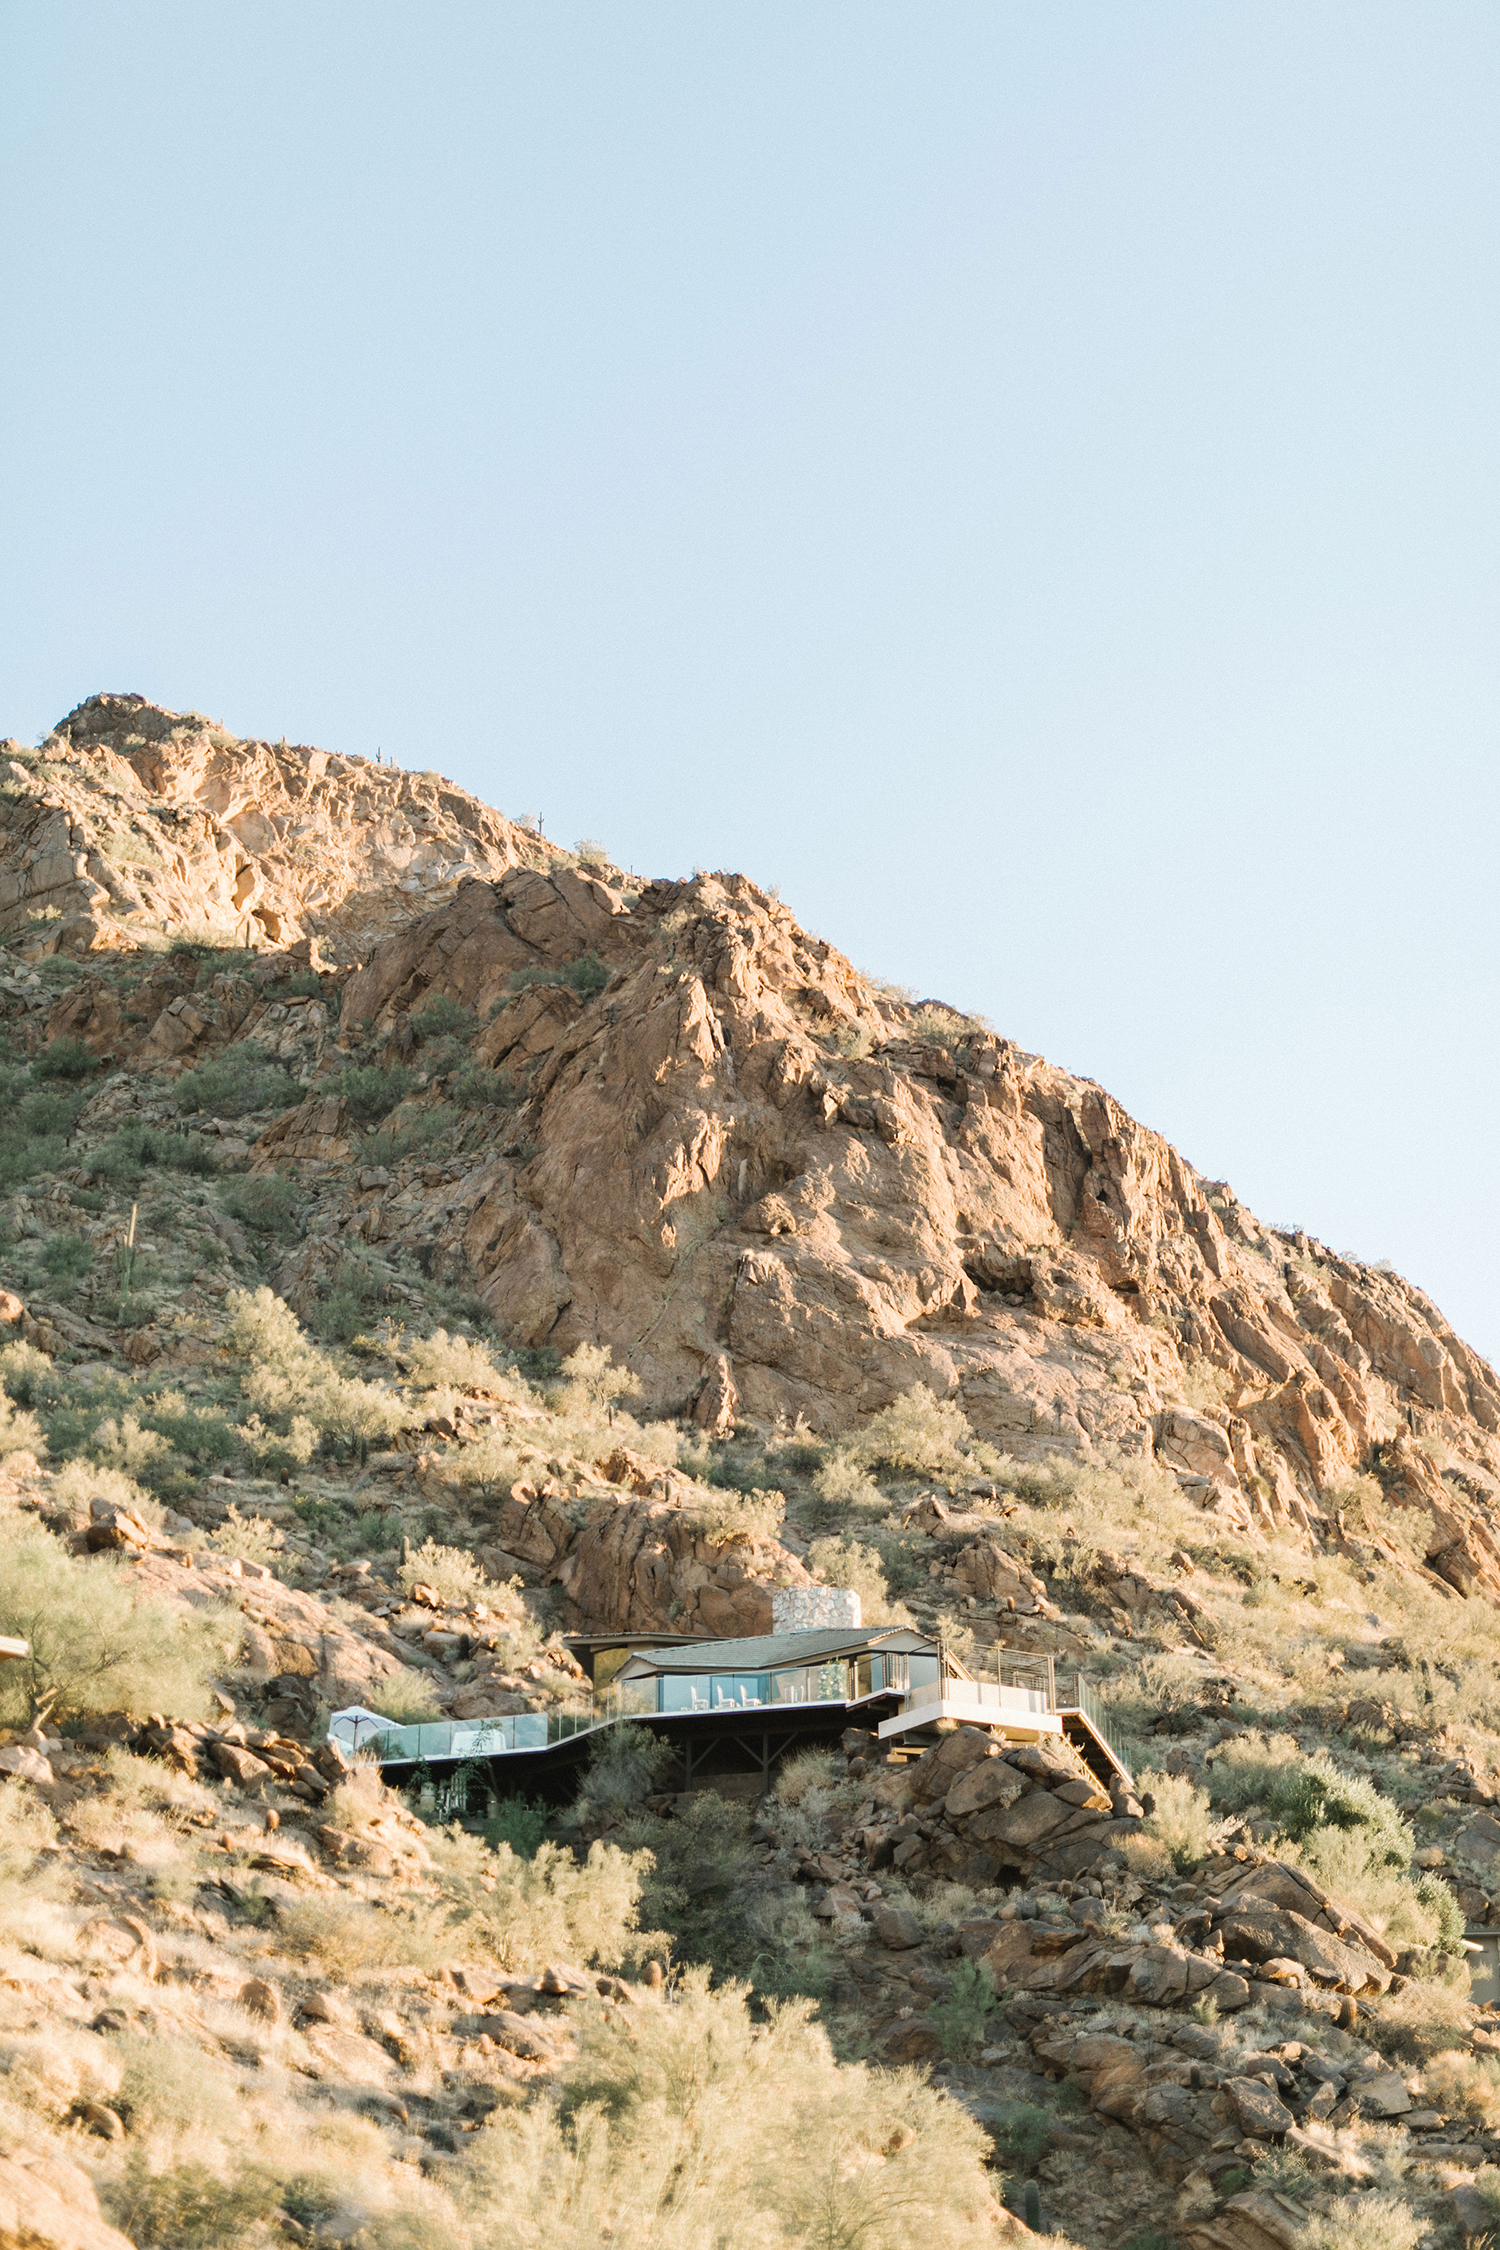 Elopement in the Arizona desert. View more over on KatinaPhotography.com #Elopement #ElopementPhotography #ArizonaWedding #ScottsdaleArizona #ArizonaWeddingPhotography #ArizonaWeddingPhotographer